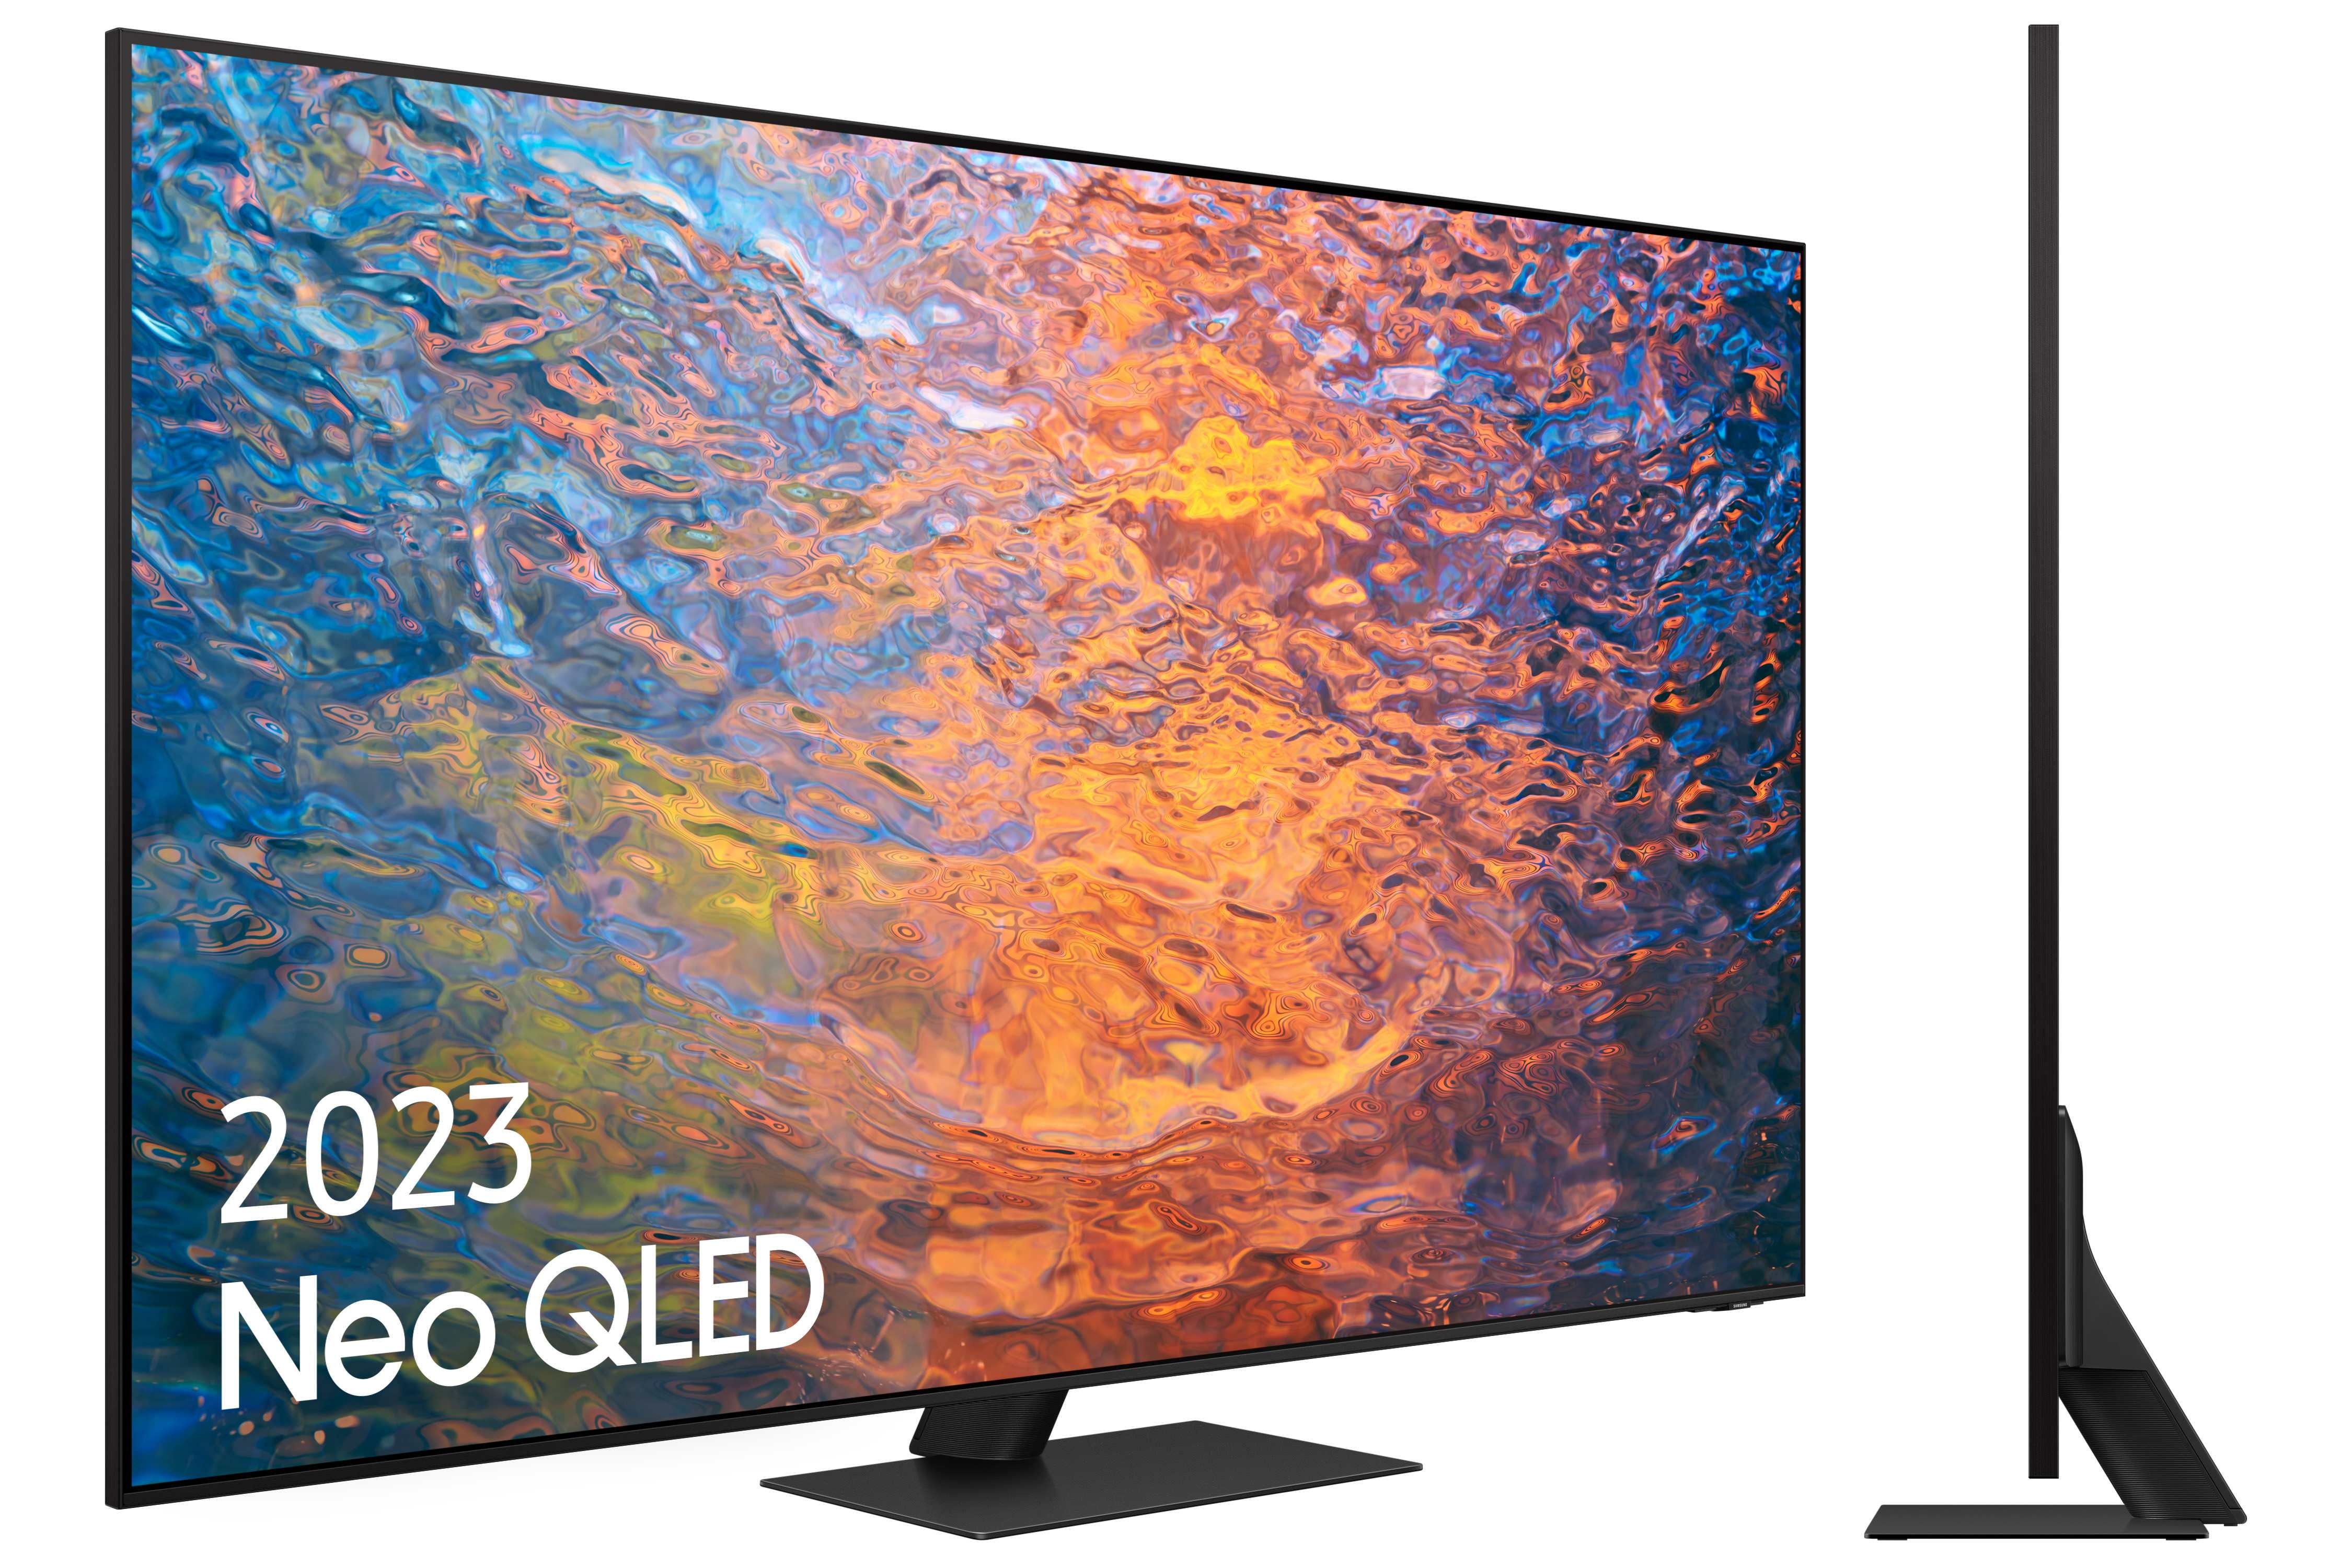 Samsung TV QN95C Neo QLED 189cm 75" Smart TV (2022) - Black, Black - Negro